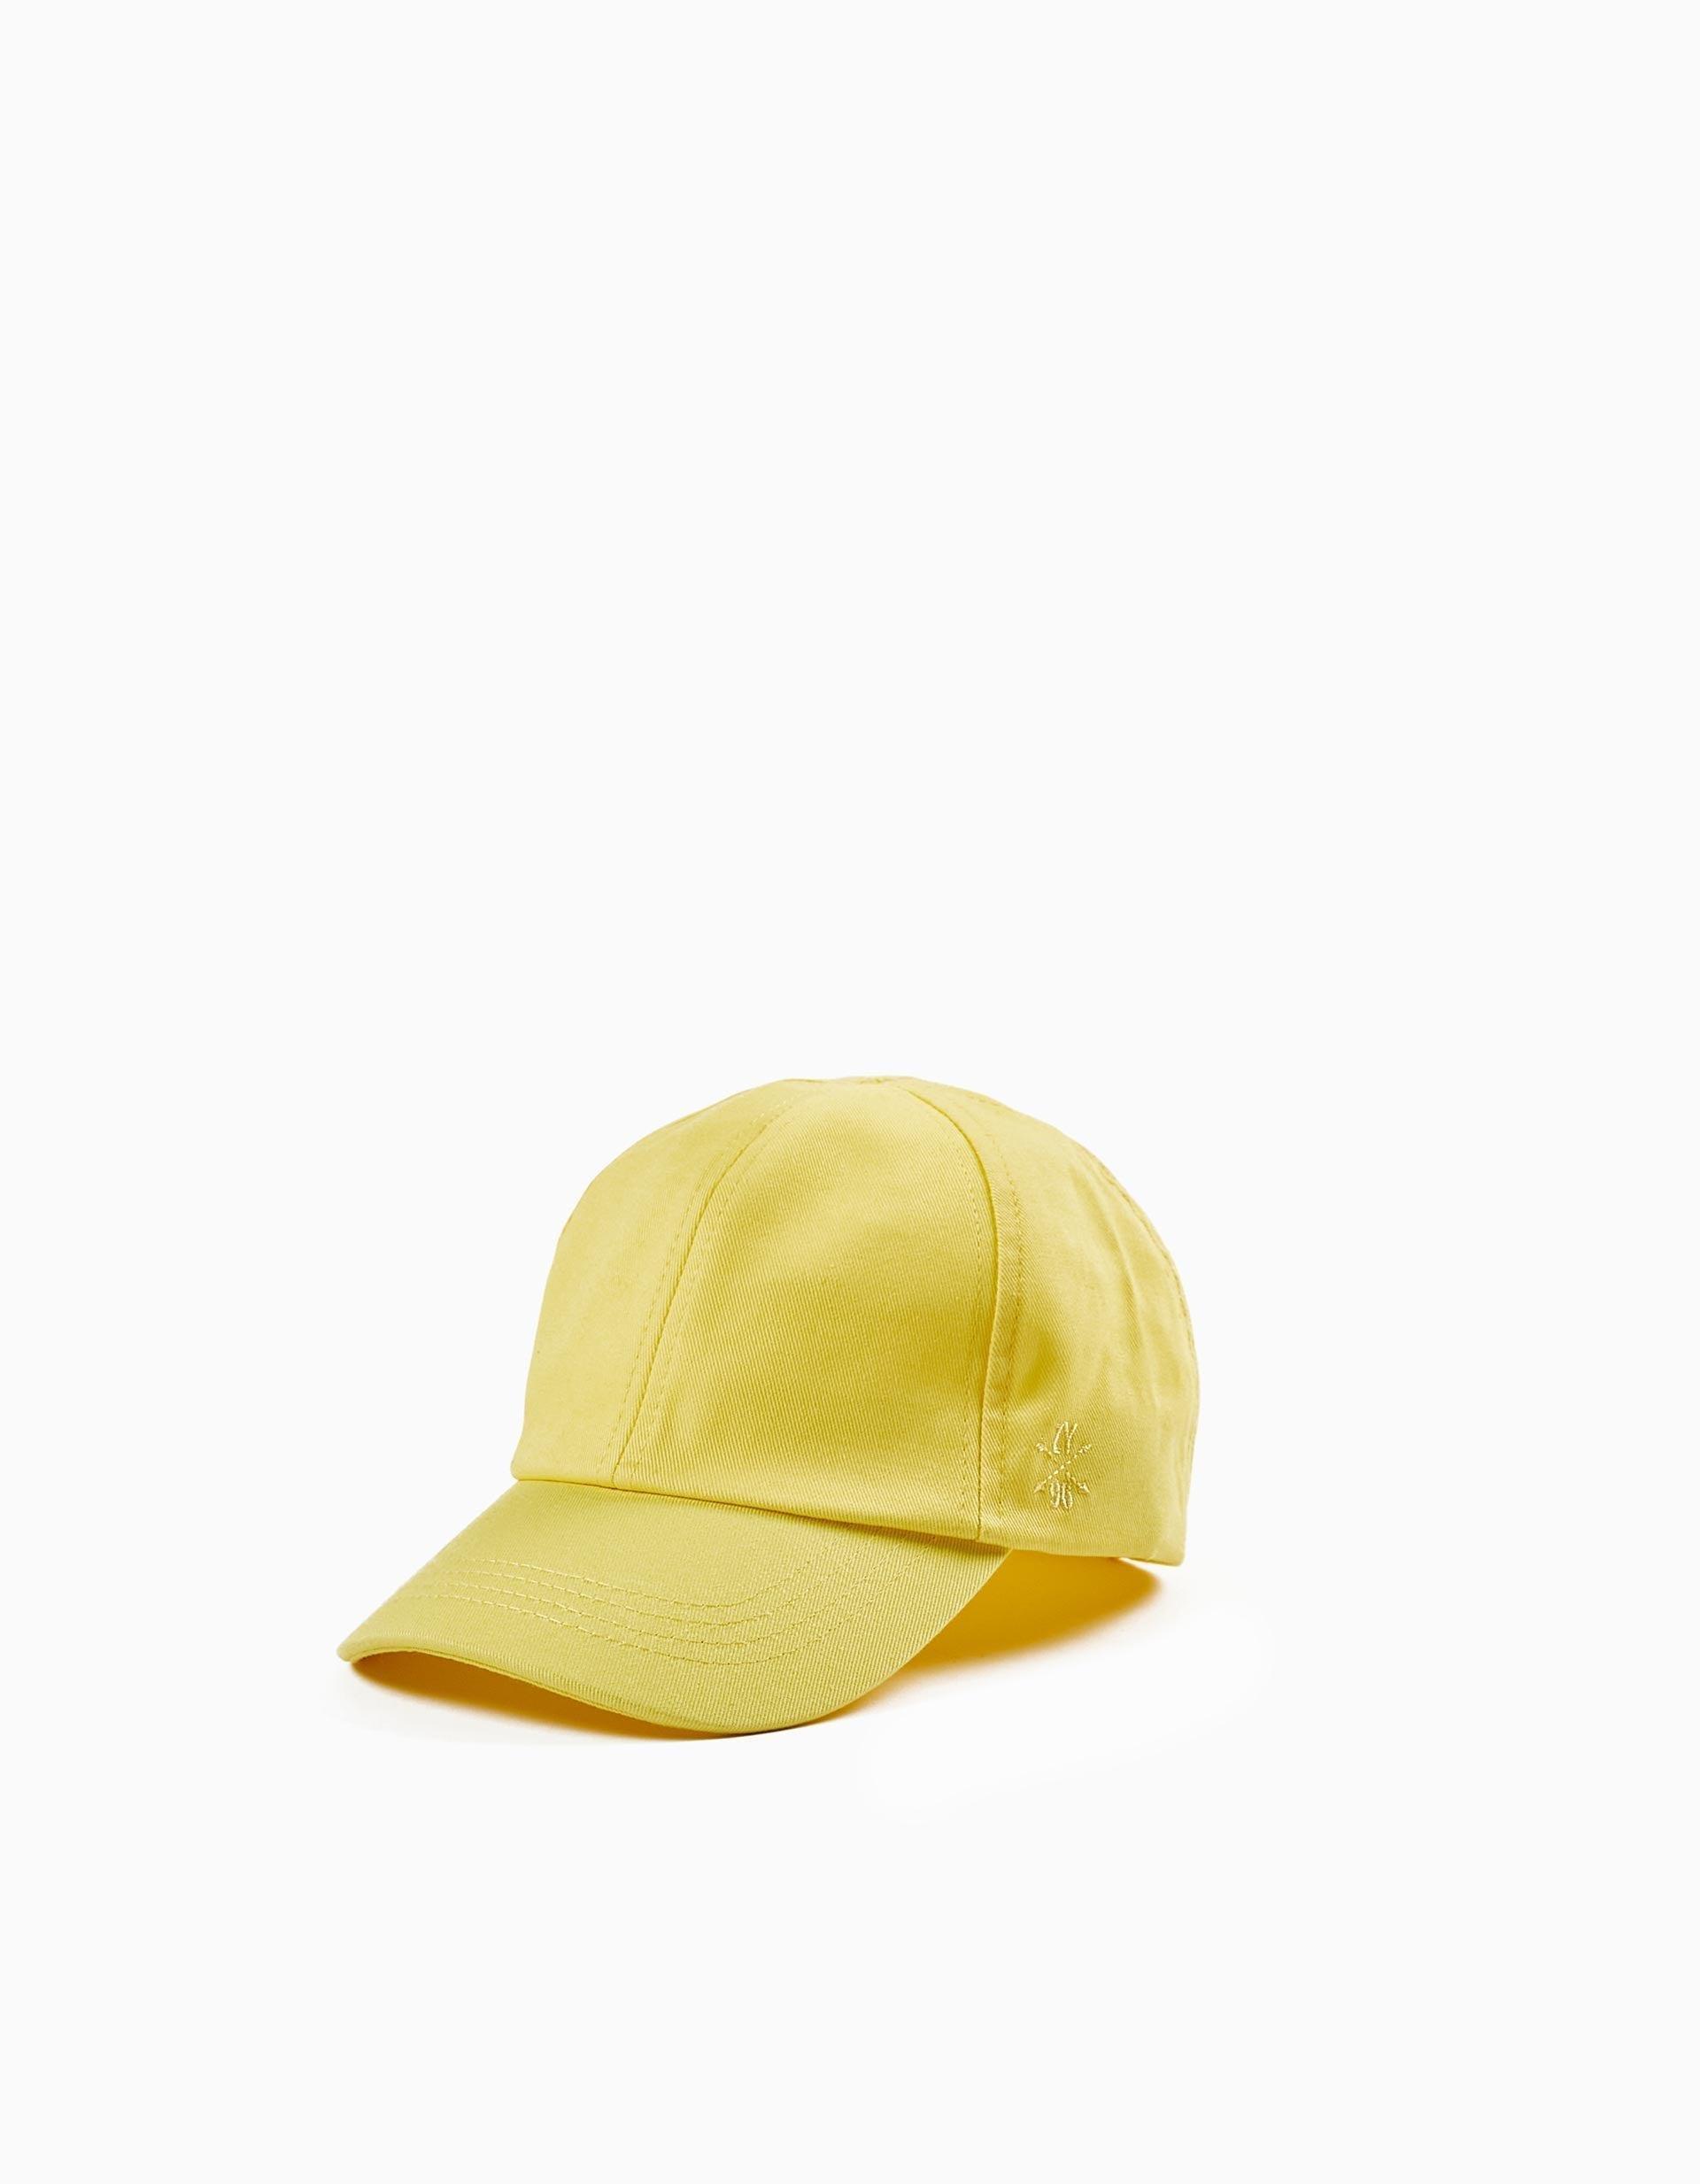 Zippy - Yellow Cotton Cap, Kids Boys